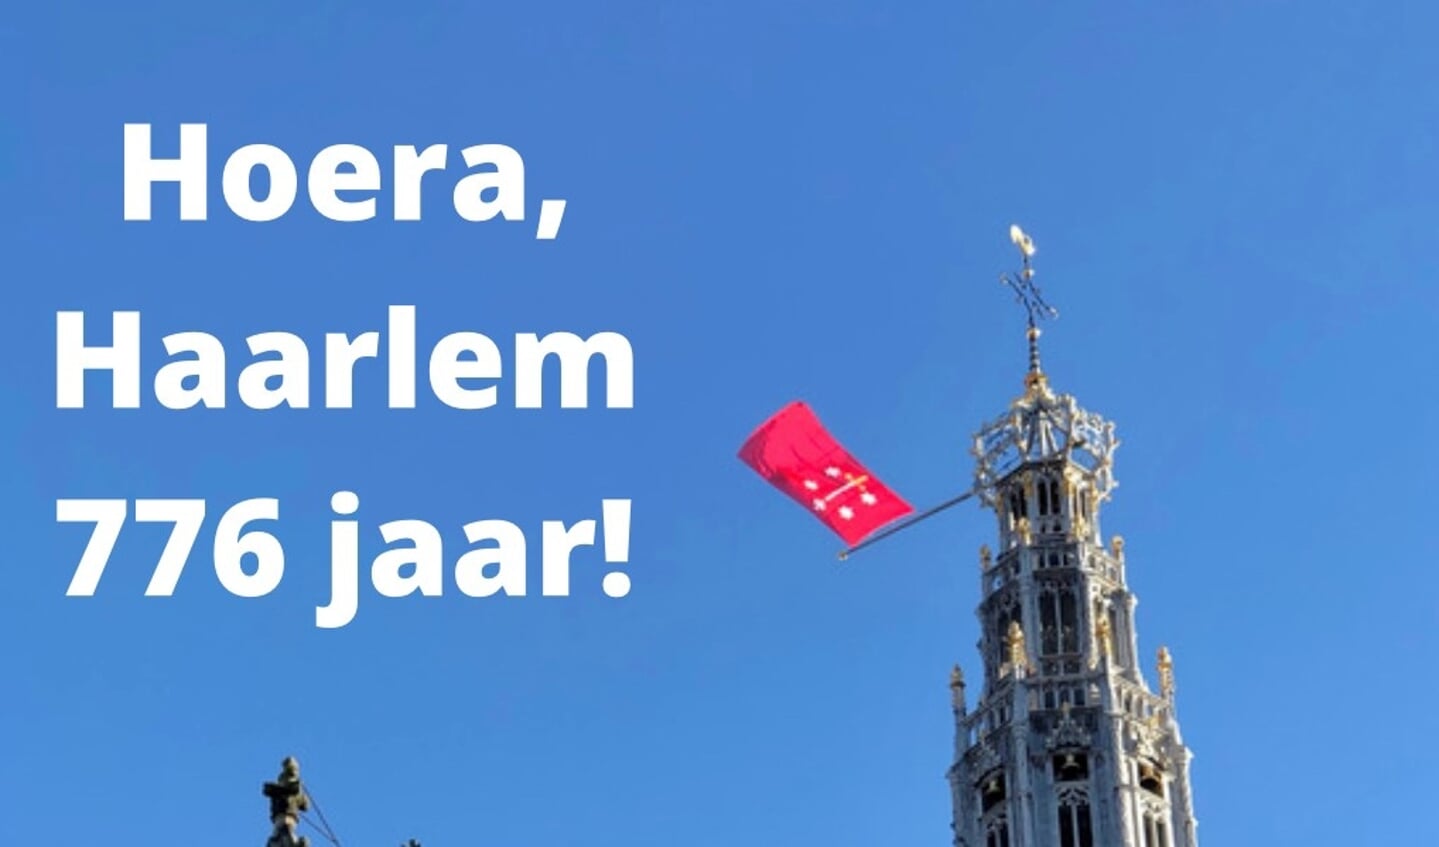 Hoera, Haarlem is 776 jaar!